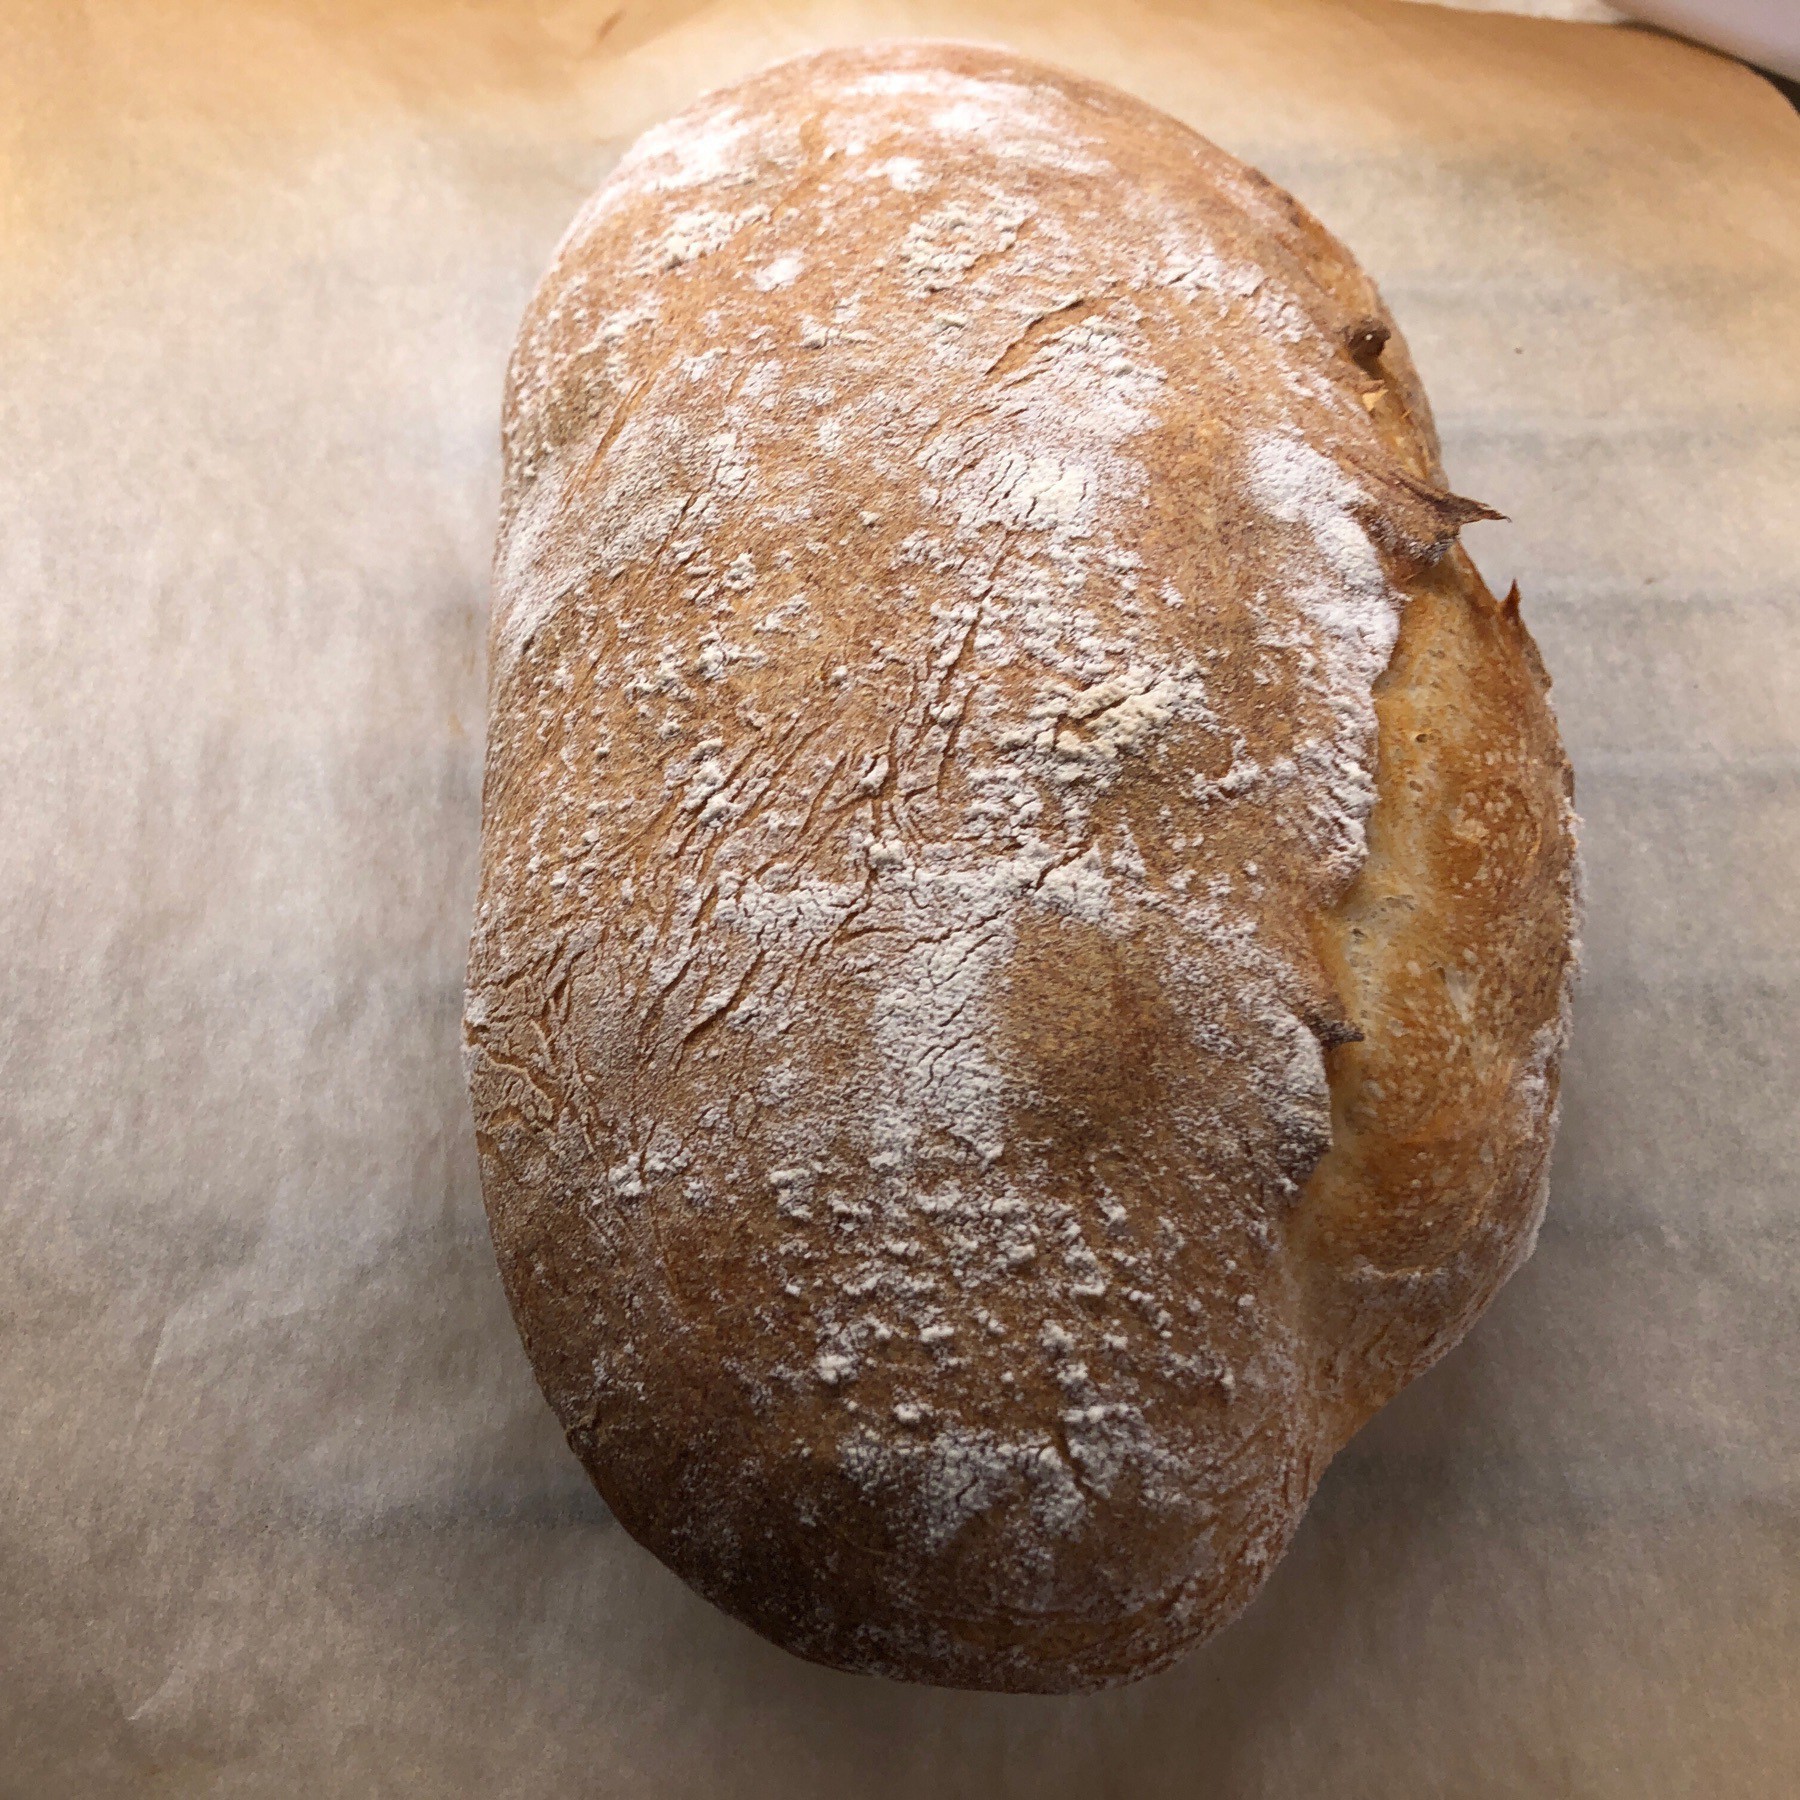 Loaf of sourdough bread.